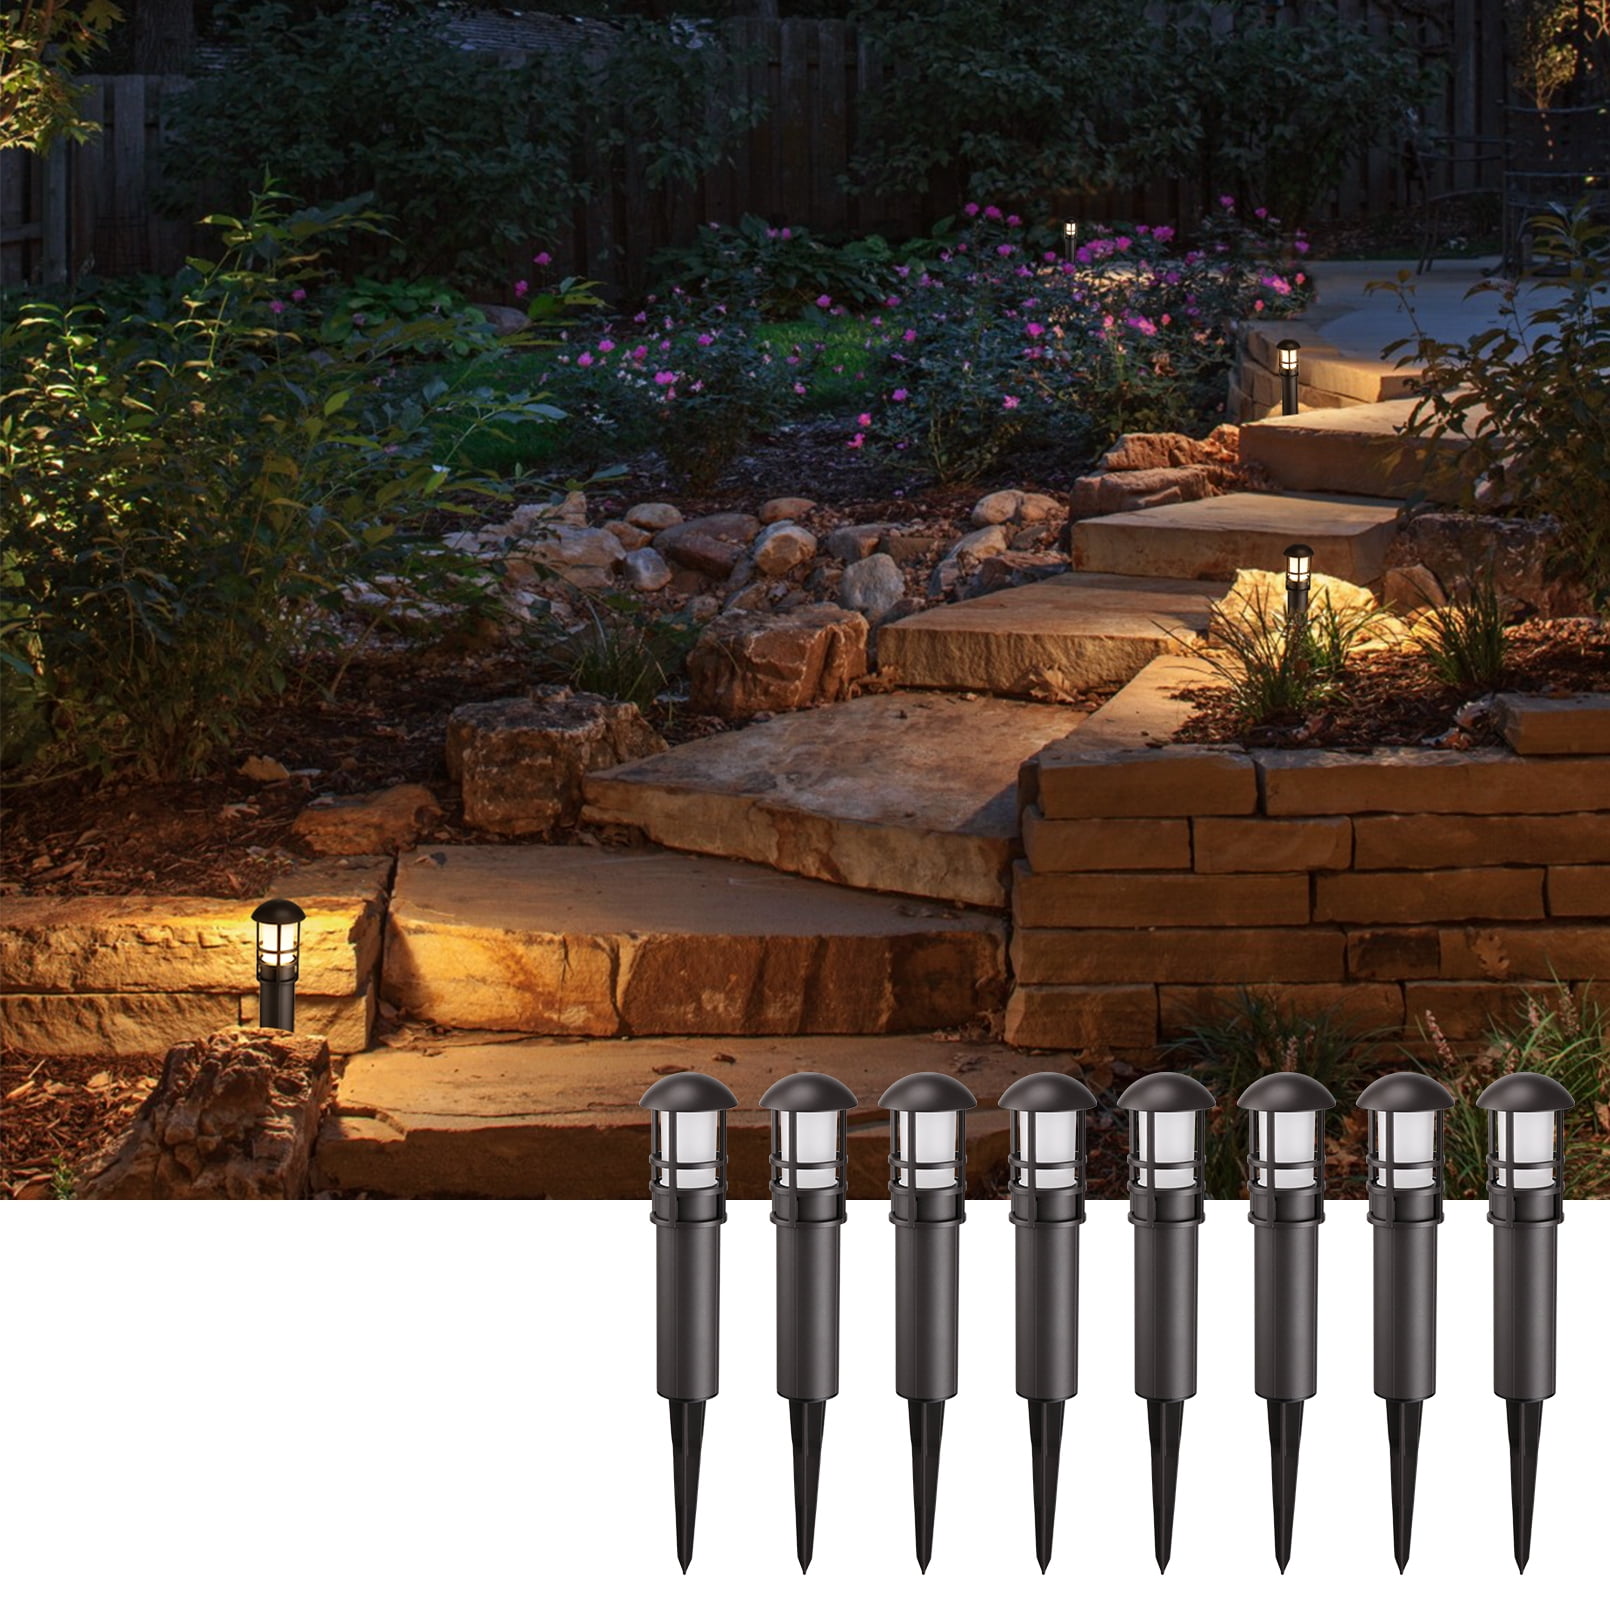 Details about   8 Pack Solar Power LED Hanging Lantern Light Waterproof Outdoor Garden Yard Lamp 